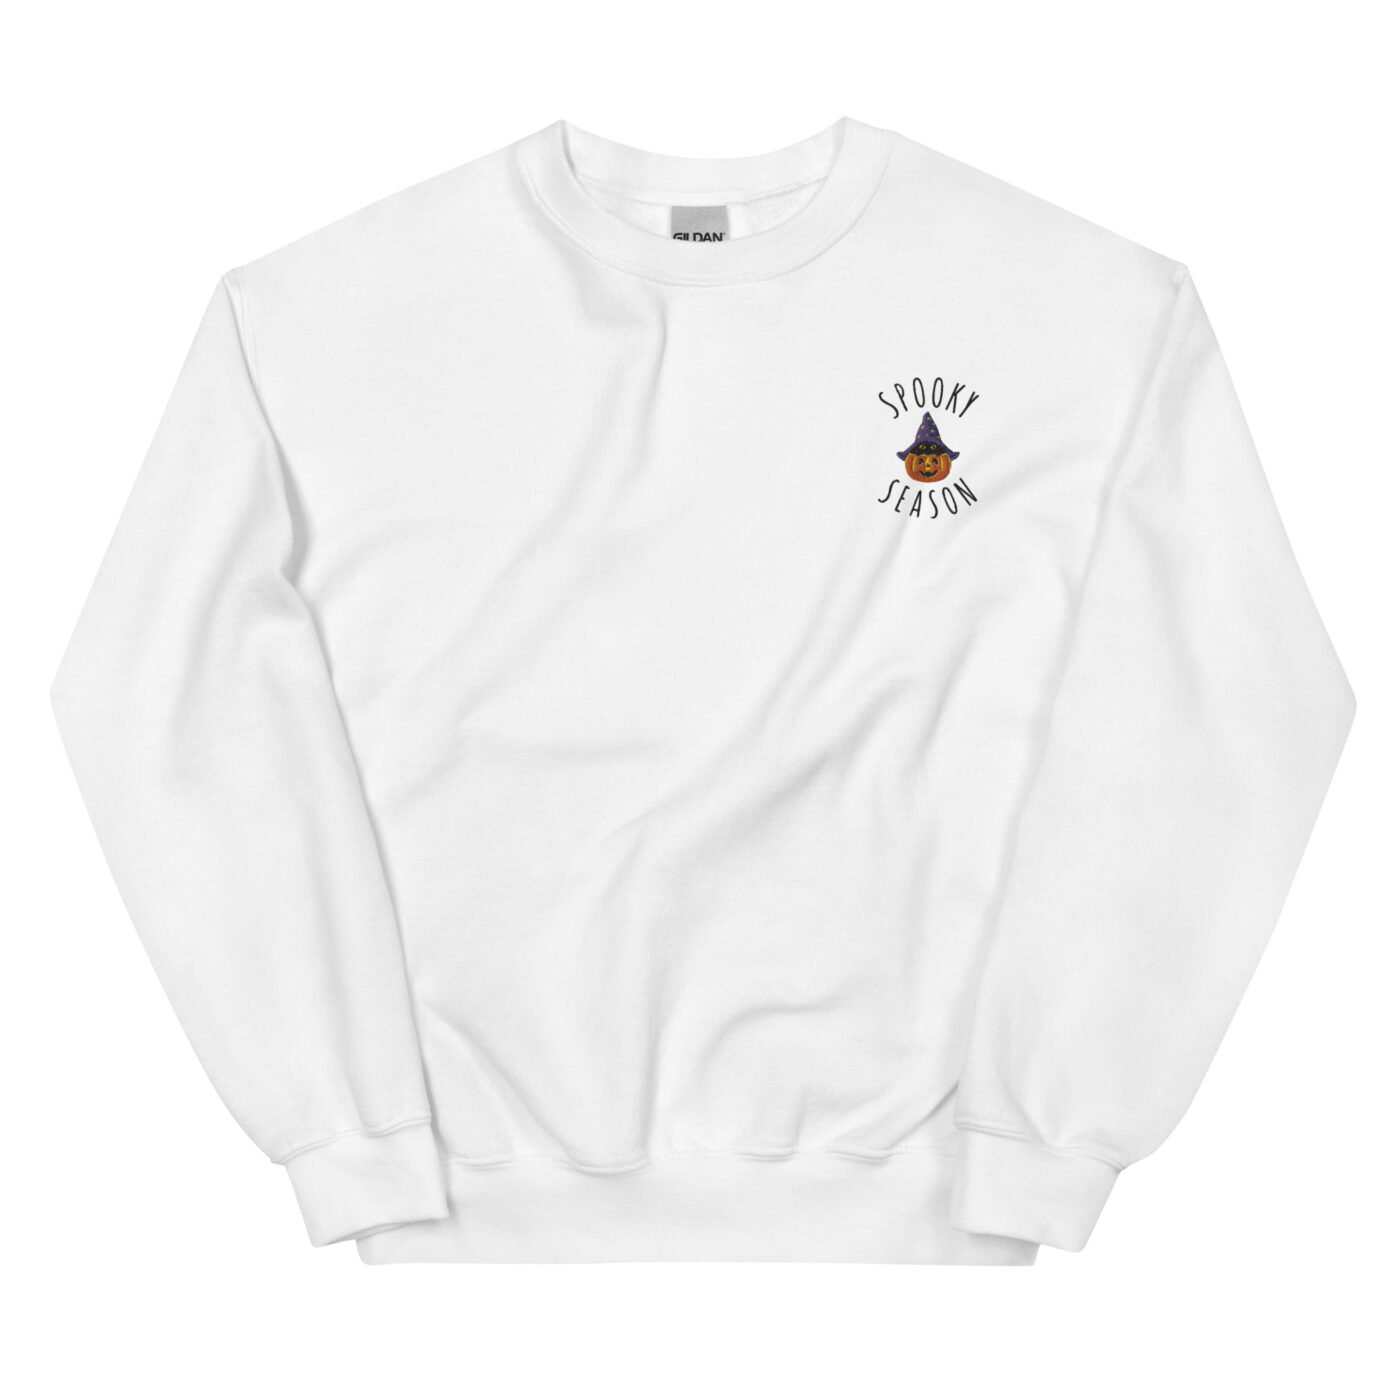 unisex crew neck sweatshirt white front 64fcffc858e1f.jpg